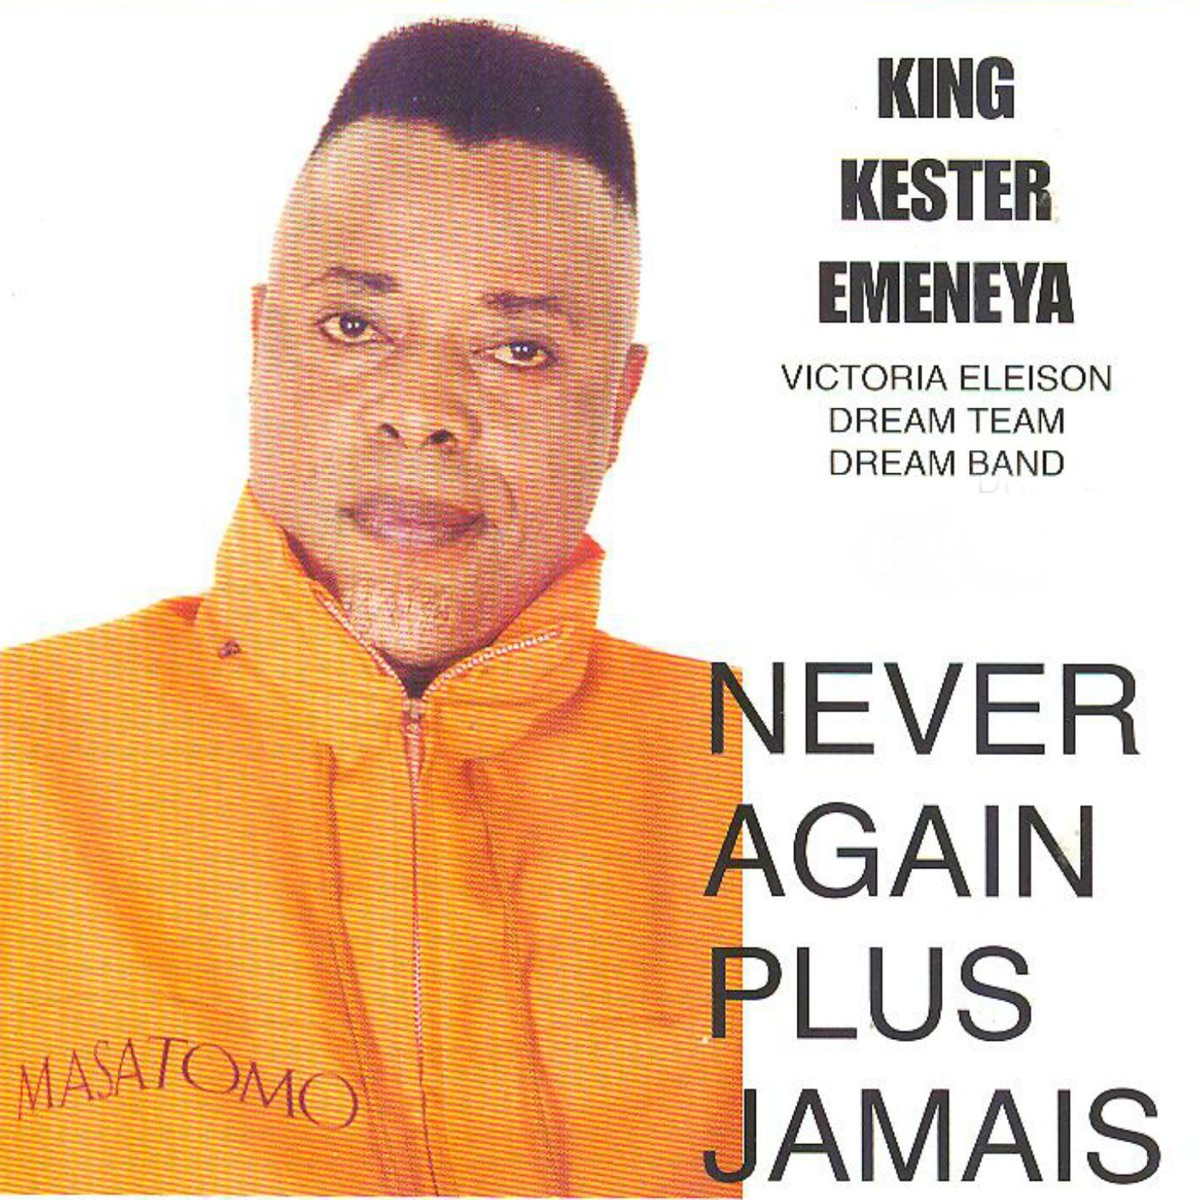 Le jour le plus long - Album by King Kester Emeneya - Apple Music